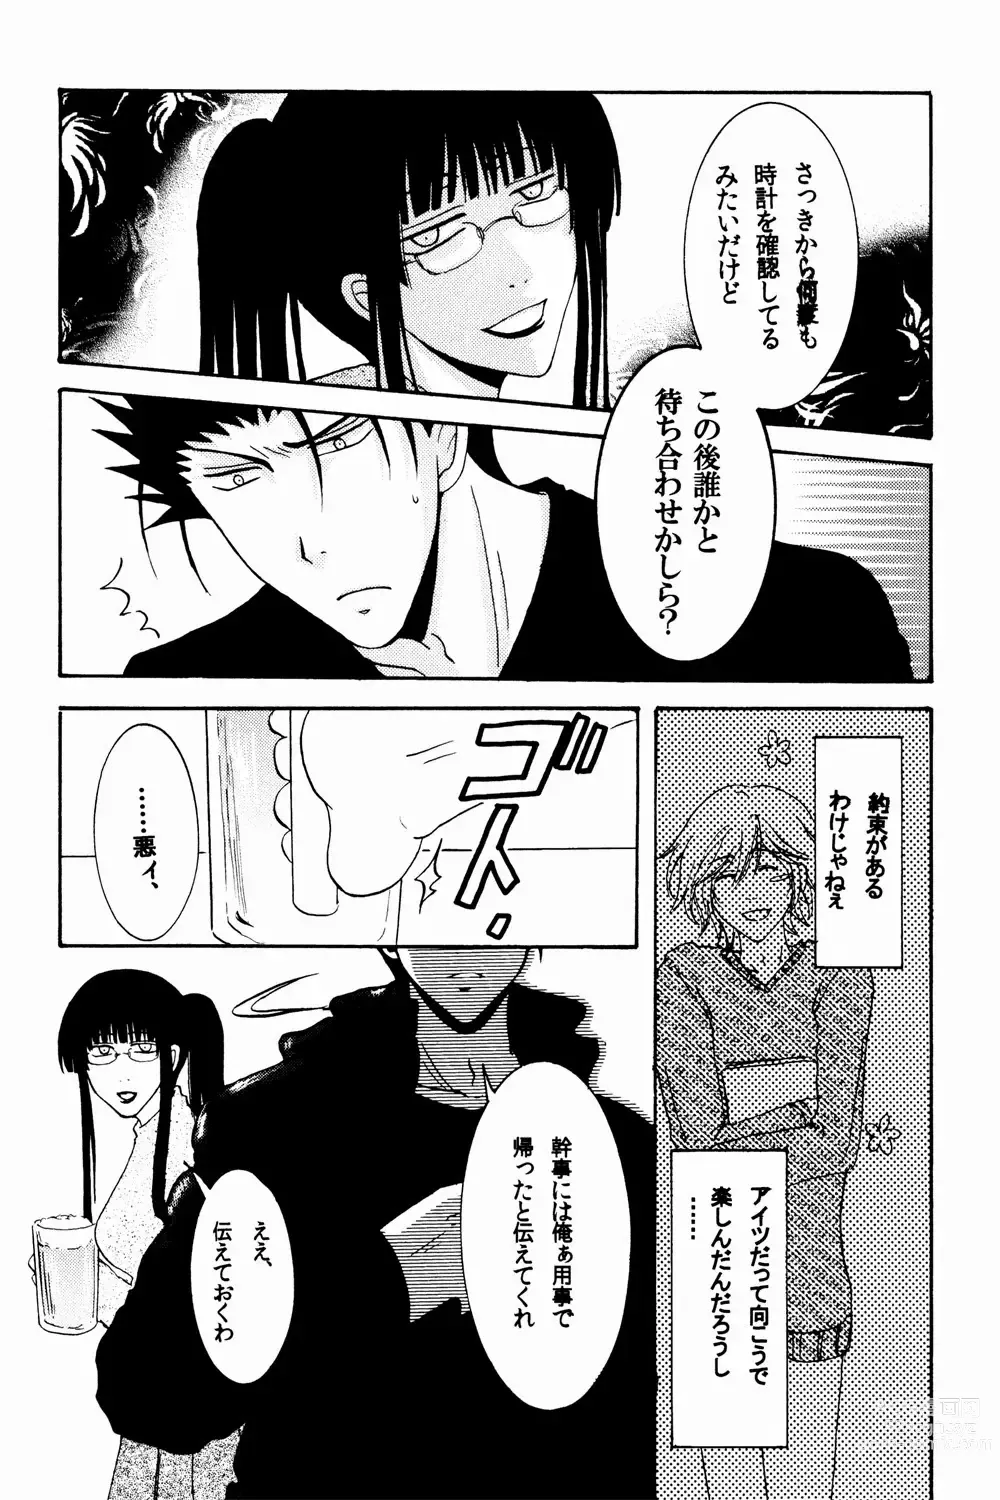 Page 8 of doujinshi New Year wa Kimi no Bed de.